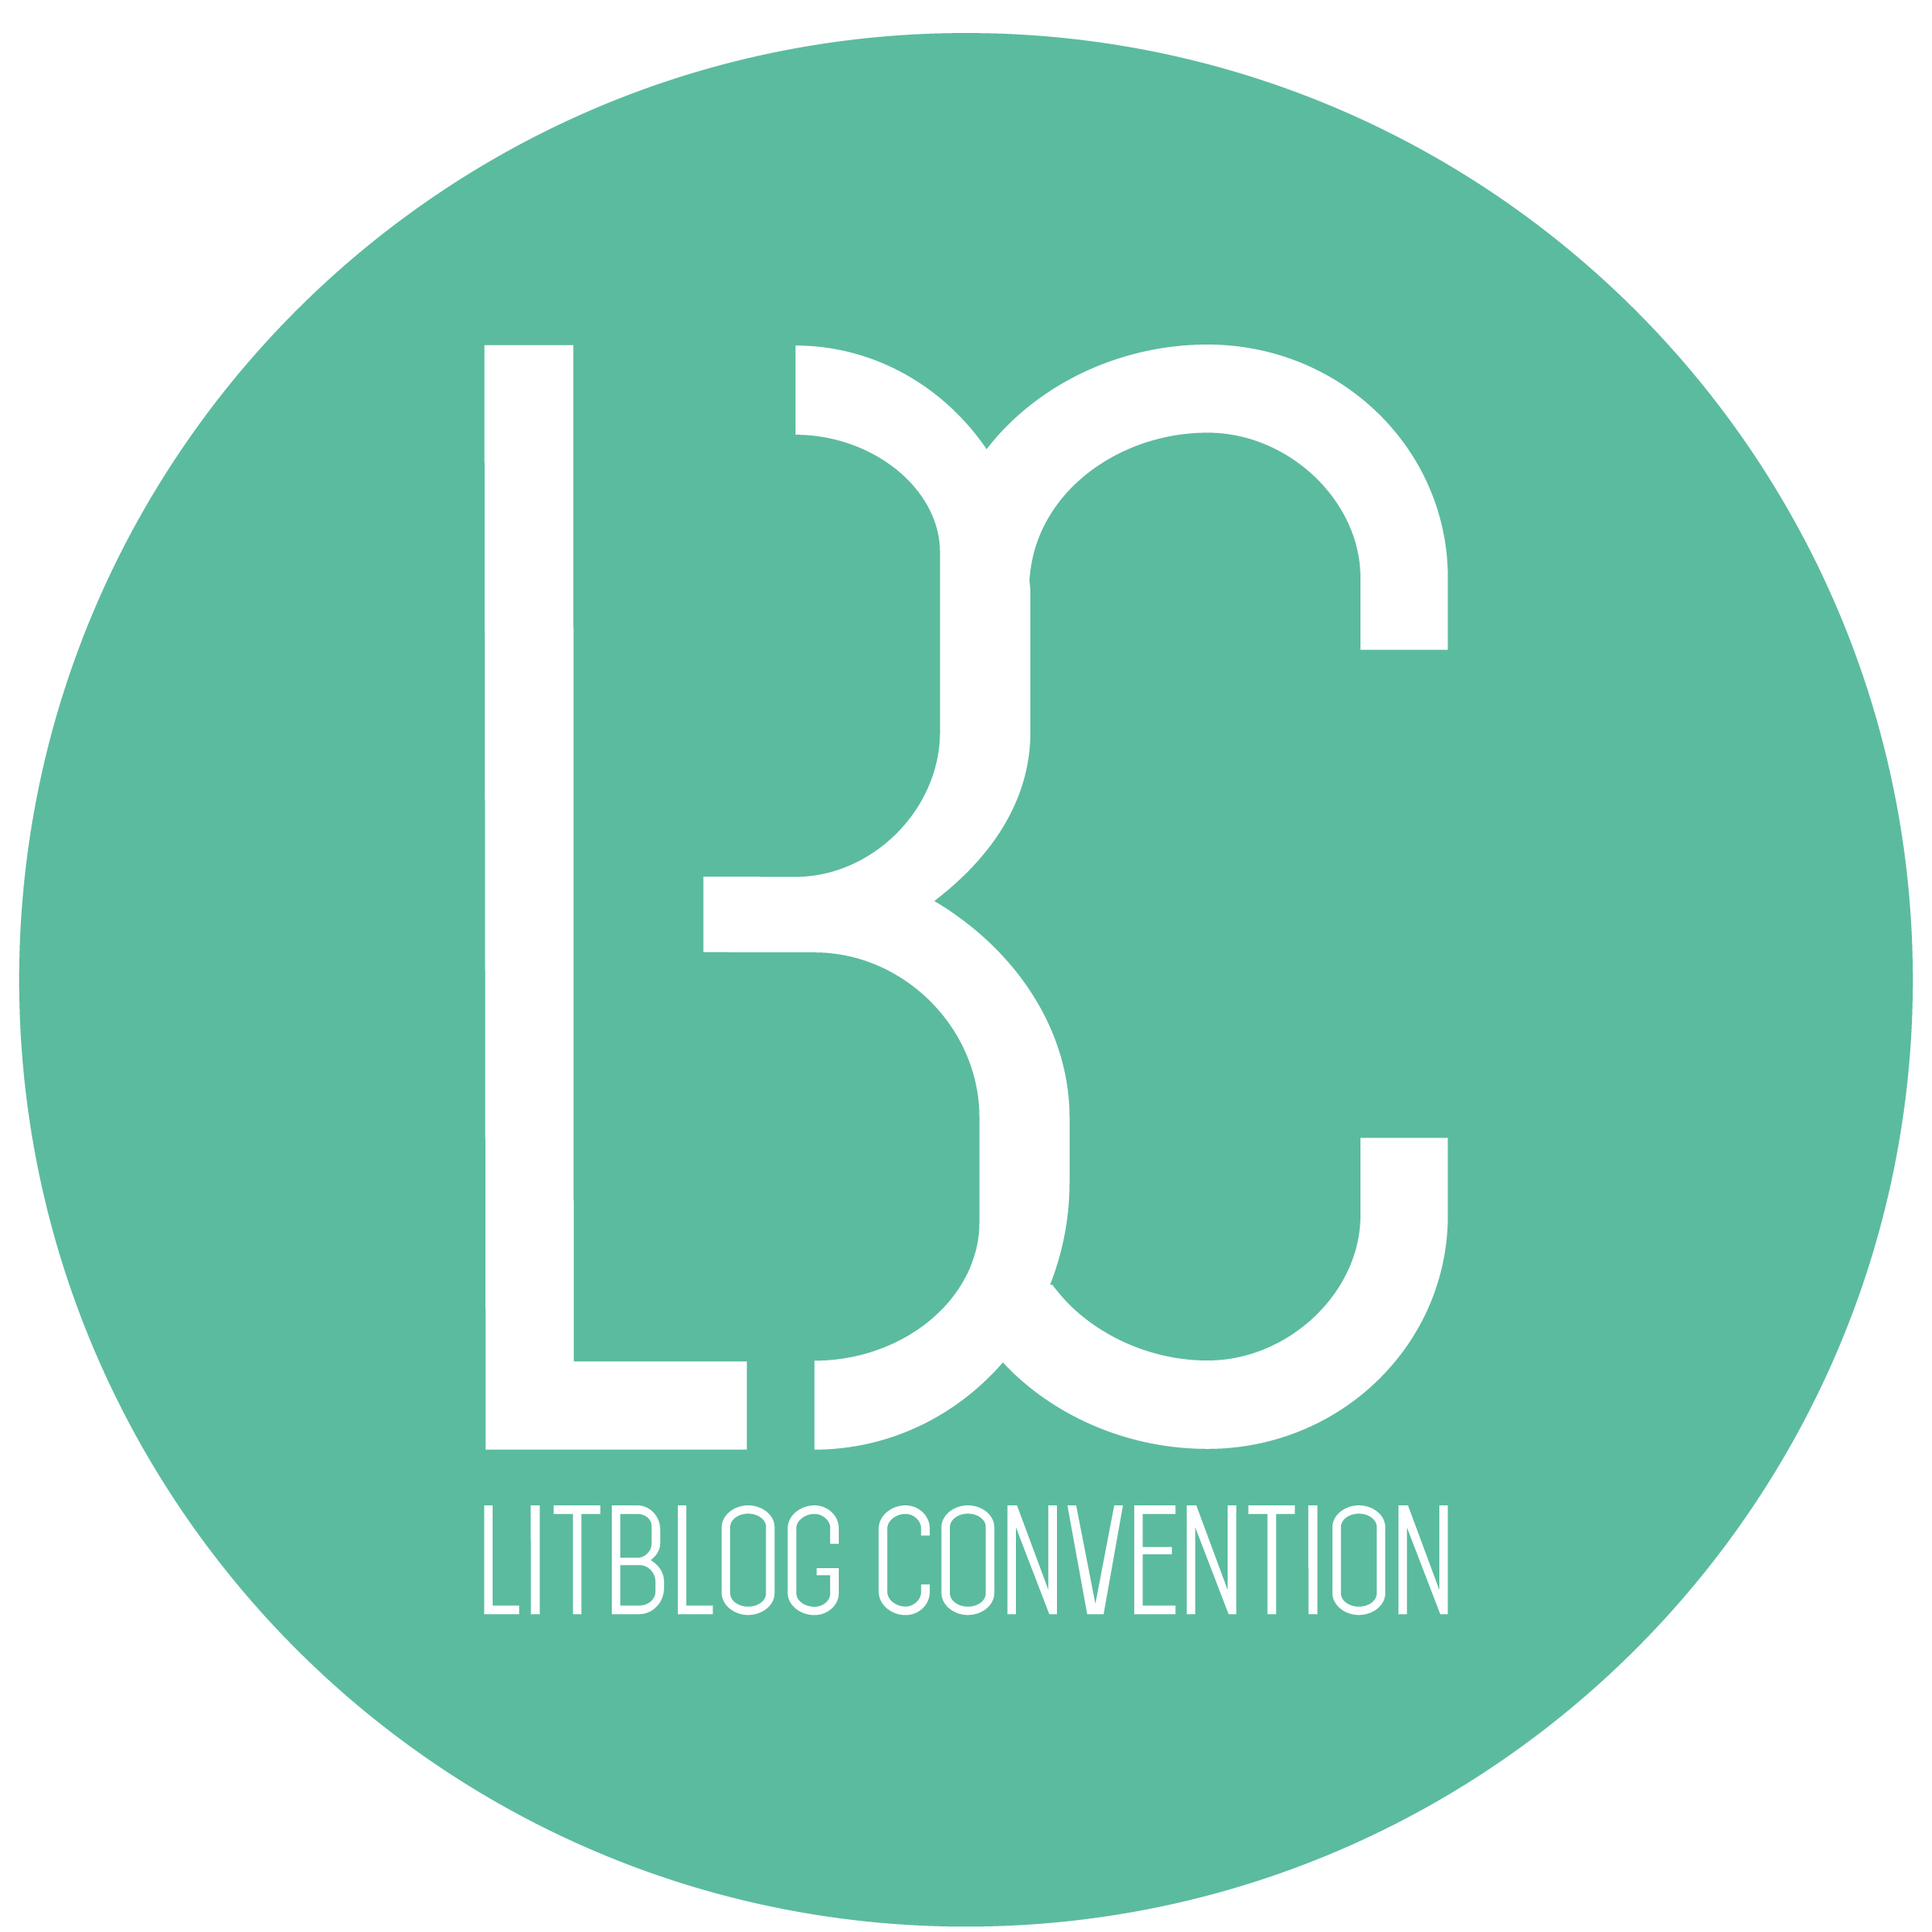 LitBlog Convention